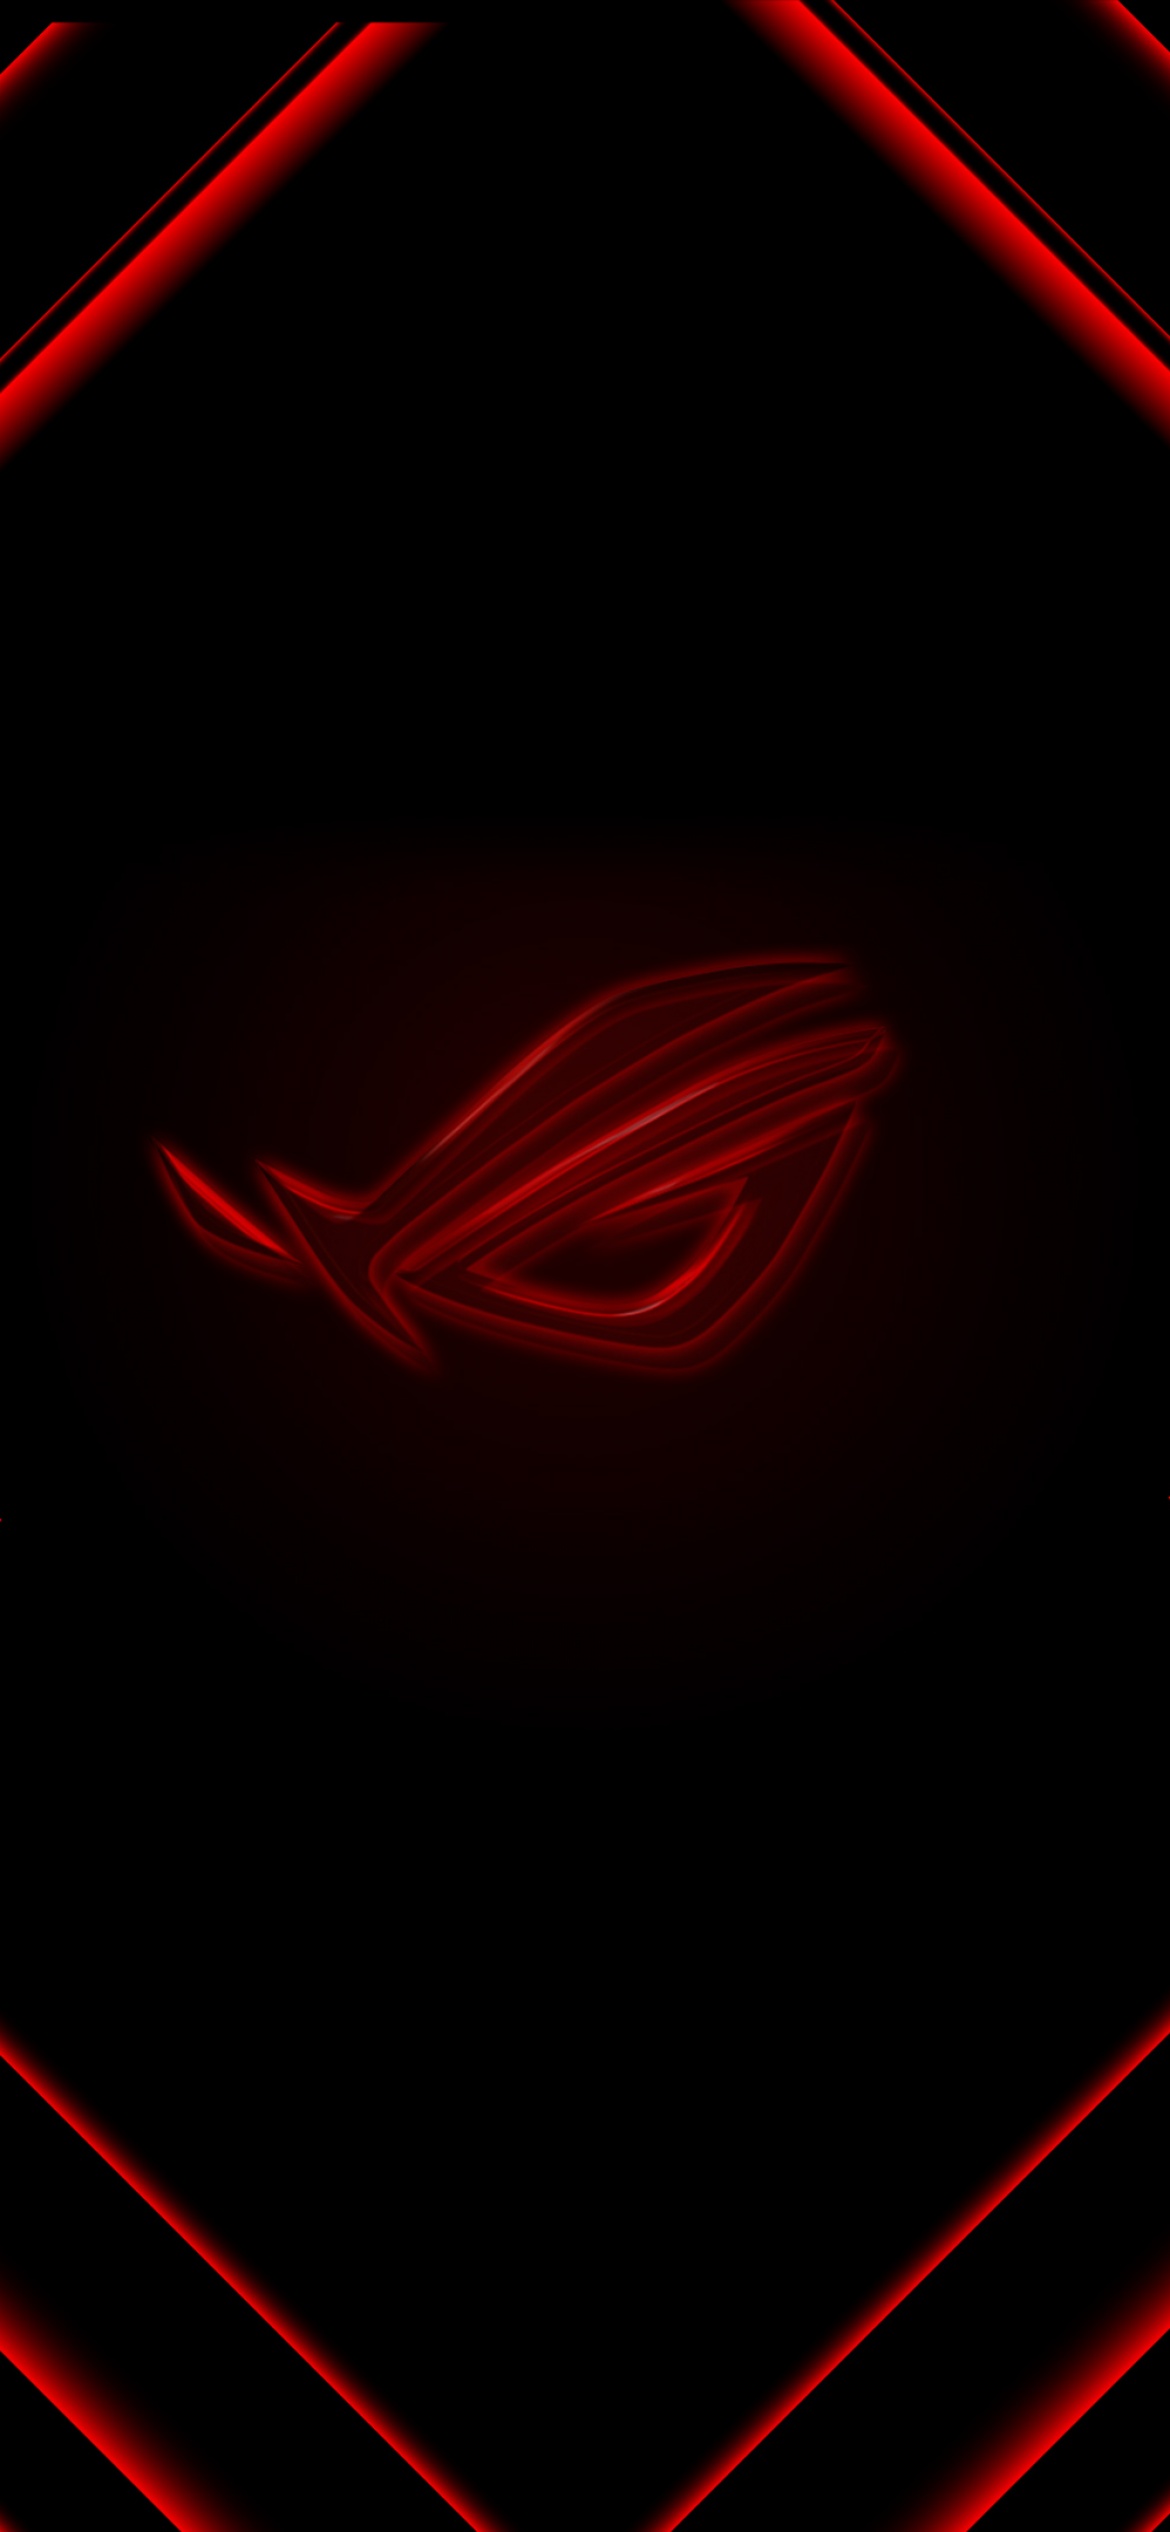 ASUS ROG Wallpaper 4K, Ambient lighting, Red lighting, Dark background